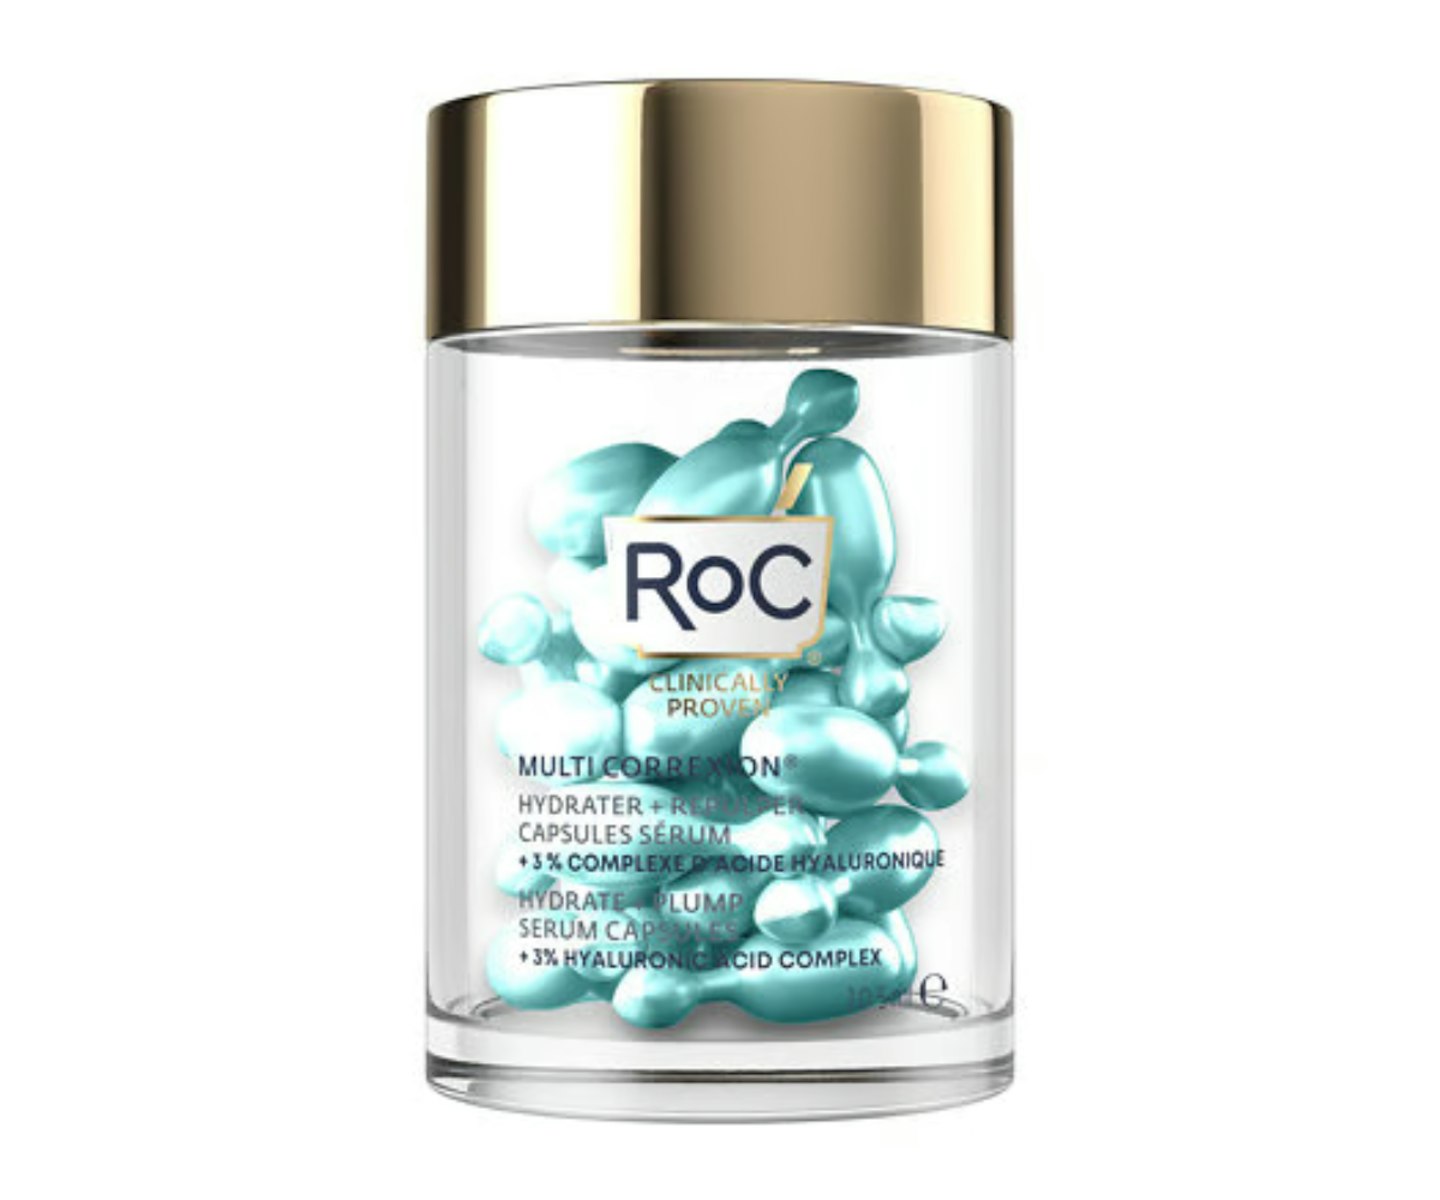 RoC Multi Correxion® Hydrate + Plump Serum Capsules x 30 